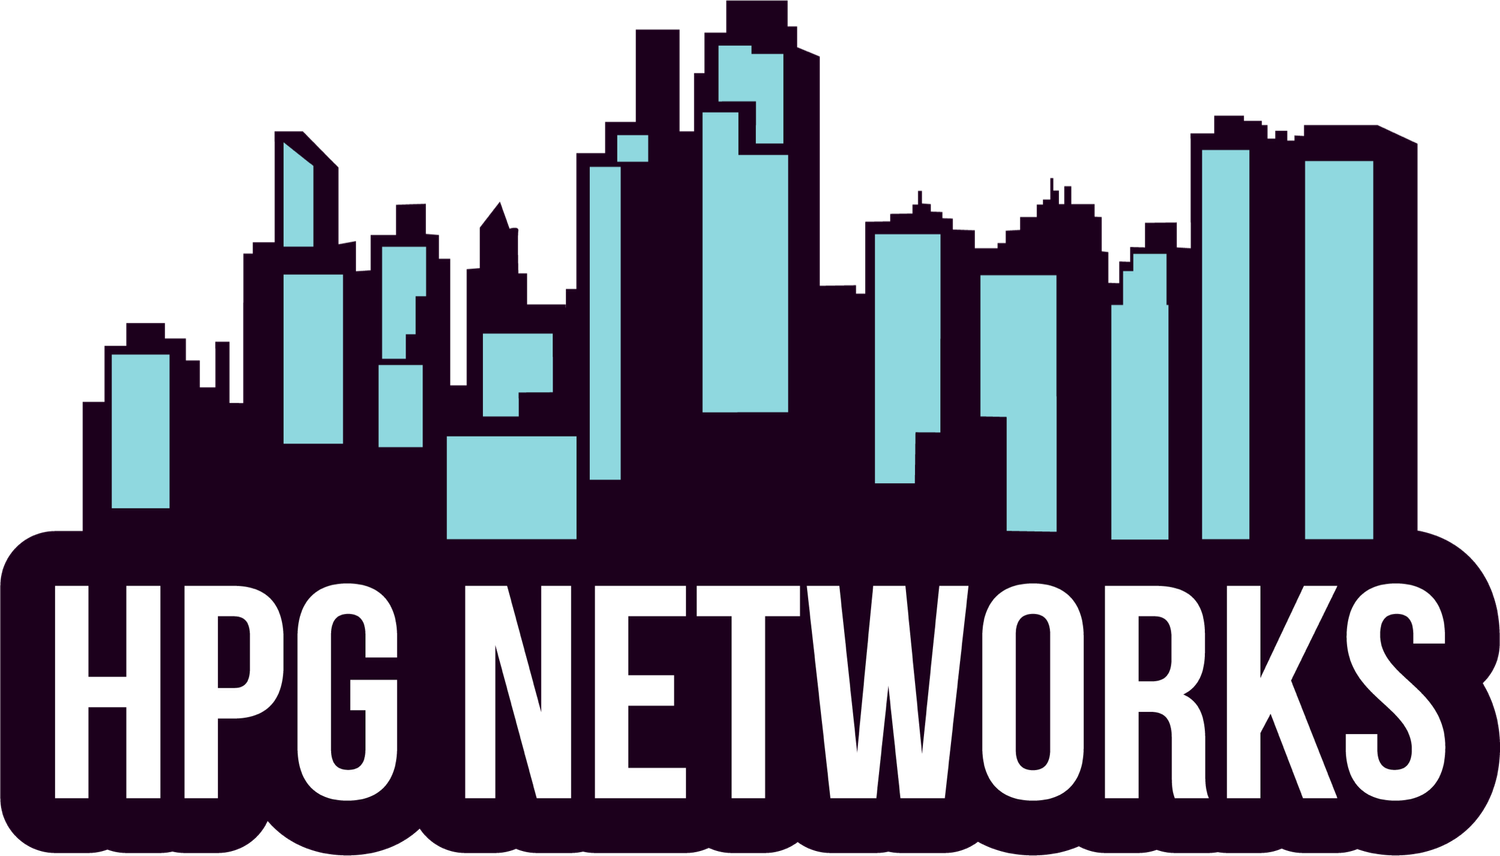 HPG Networks        